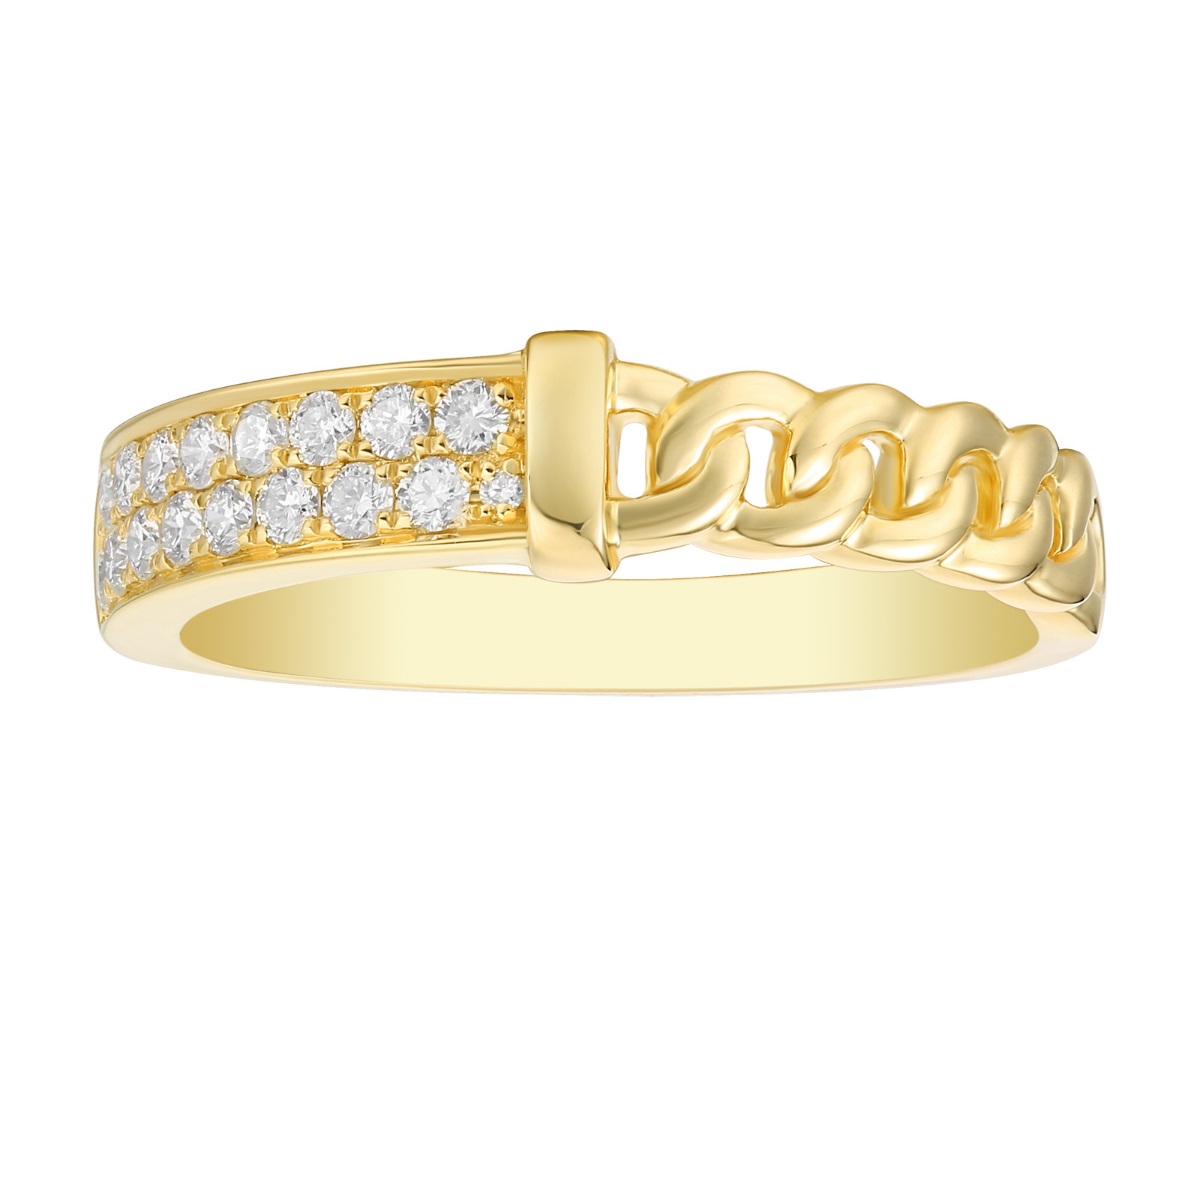 R36695WHT – 18K Yellow Gold  Diamond Ring, 0.25 TCW